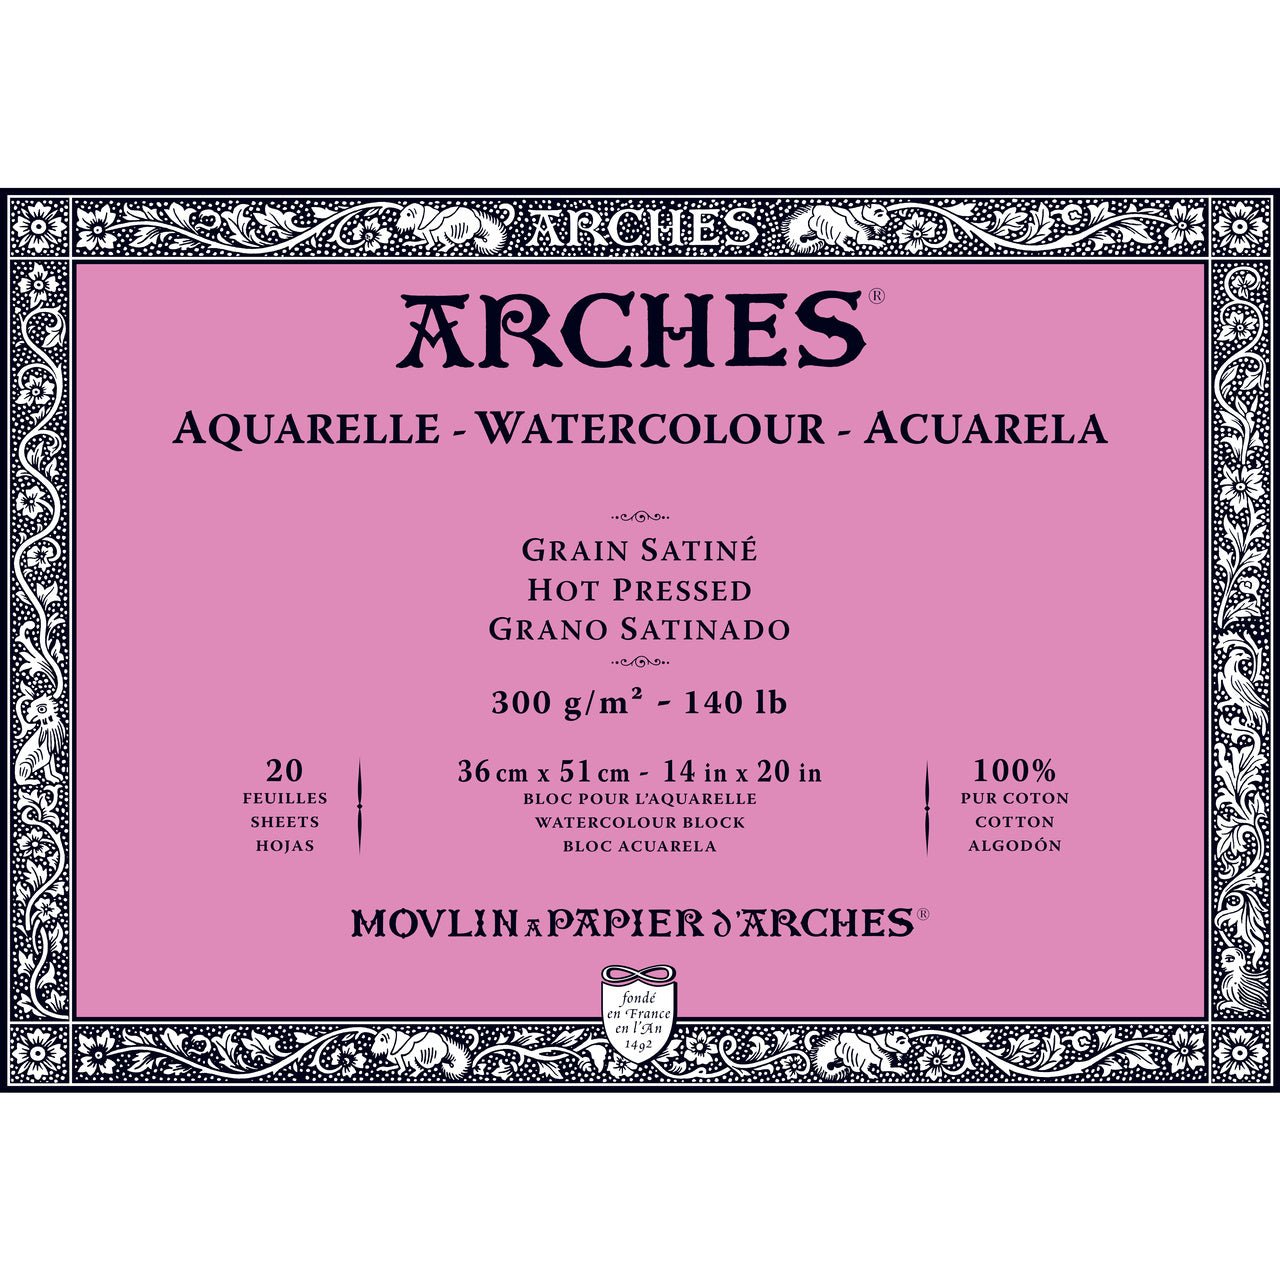 ARCHES Watercolor Block - Hot Pressed 140 lb 14x20 inch (20 Sheets) - merriartist.com